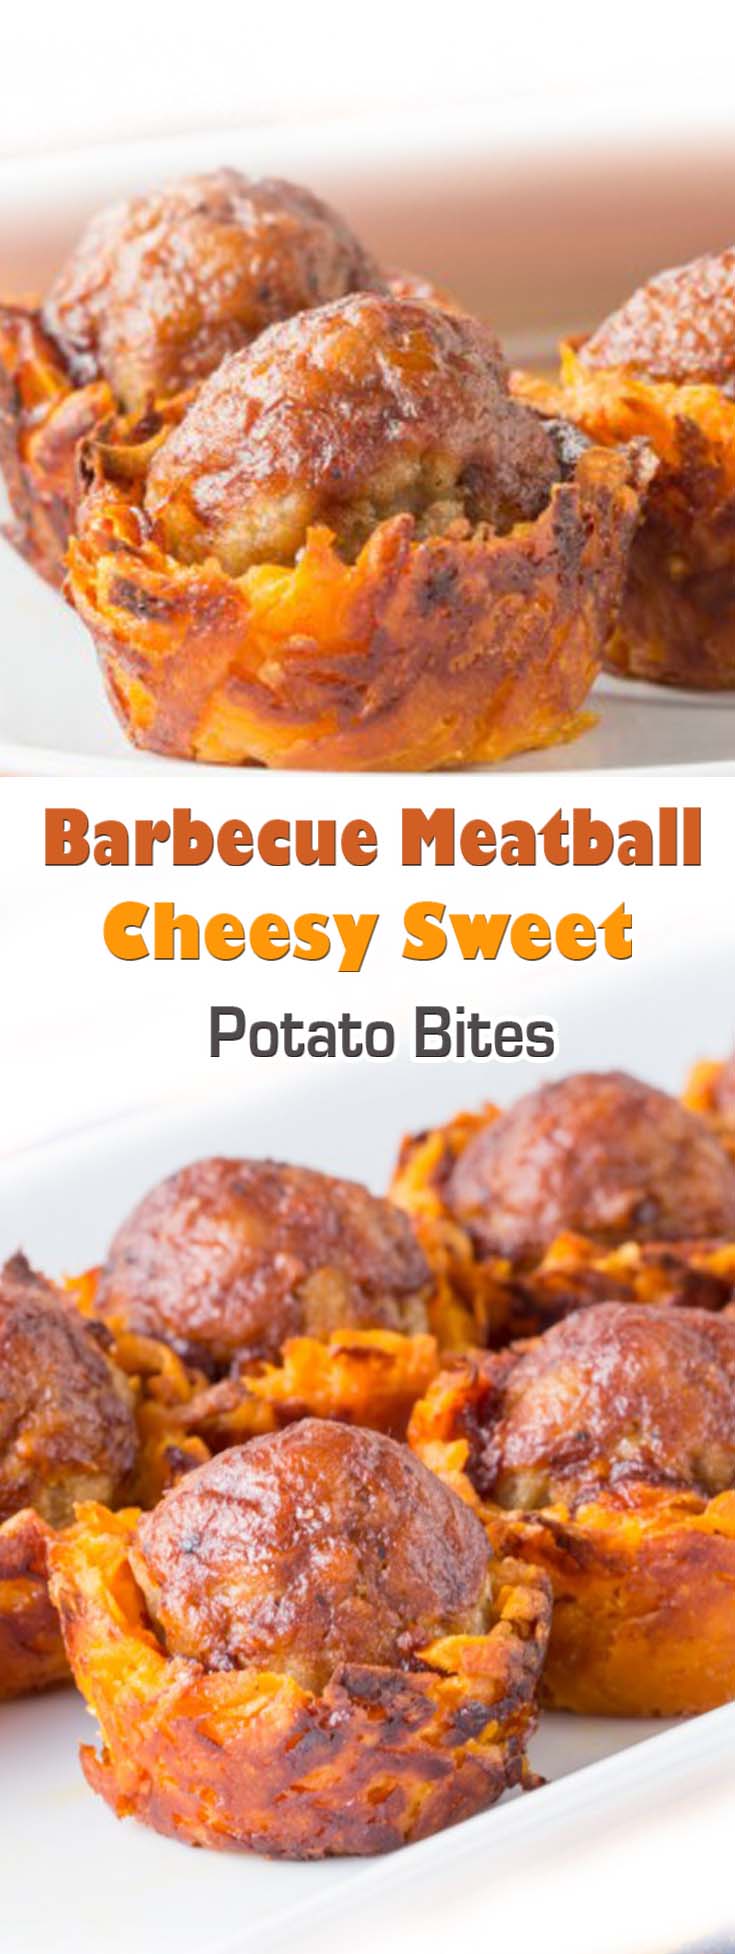 Barbecue Meatball Cheesy Sweet Potato Bites